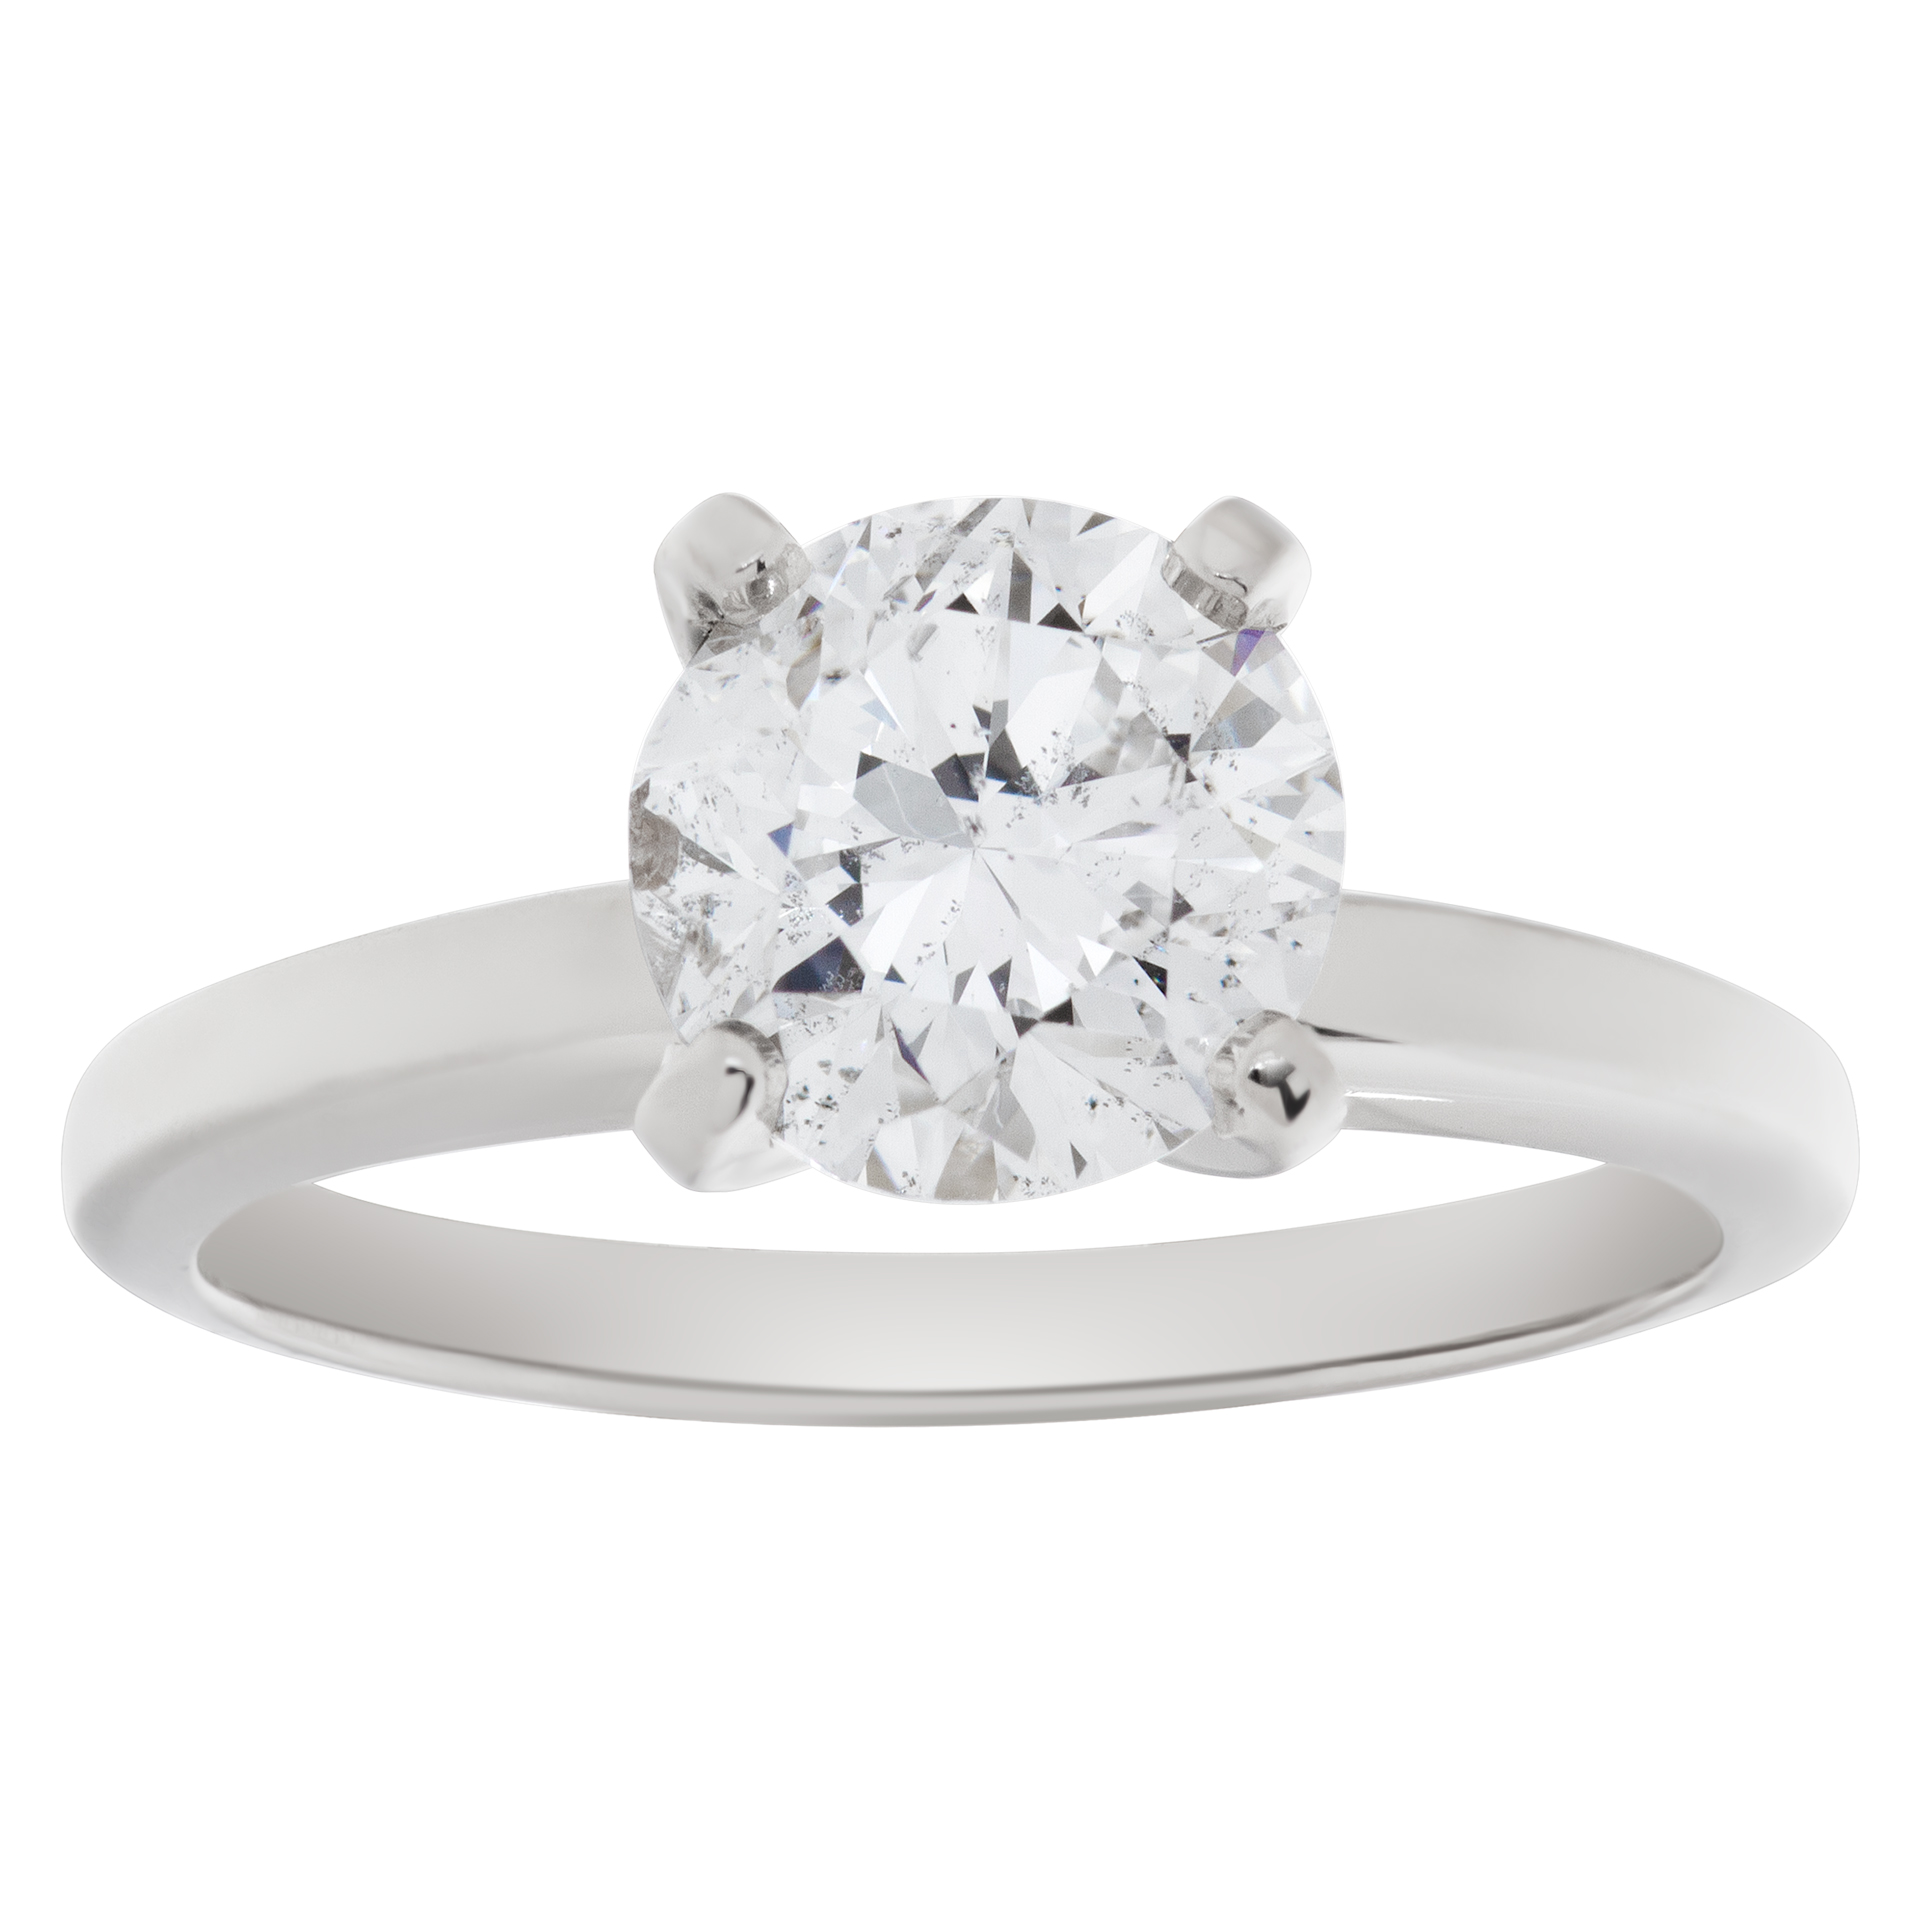 GIA certified round brilliant diamond 1.51 carat (G color, I1 clarity) image 1